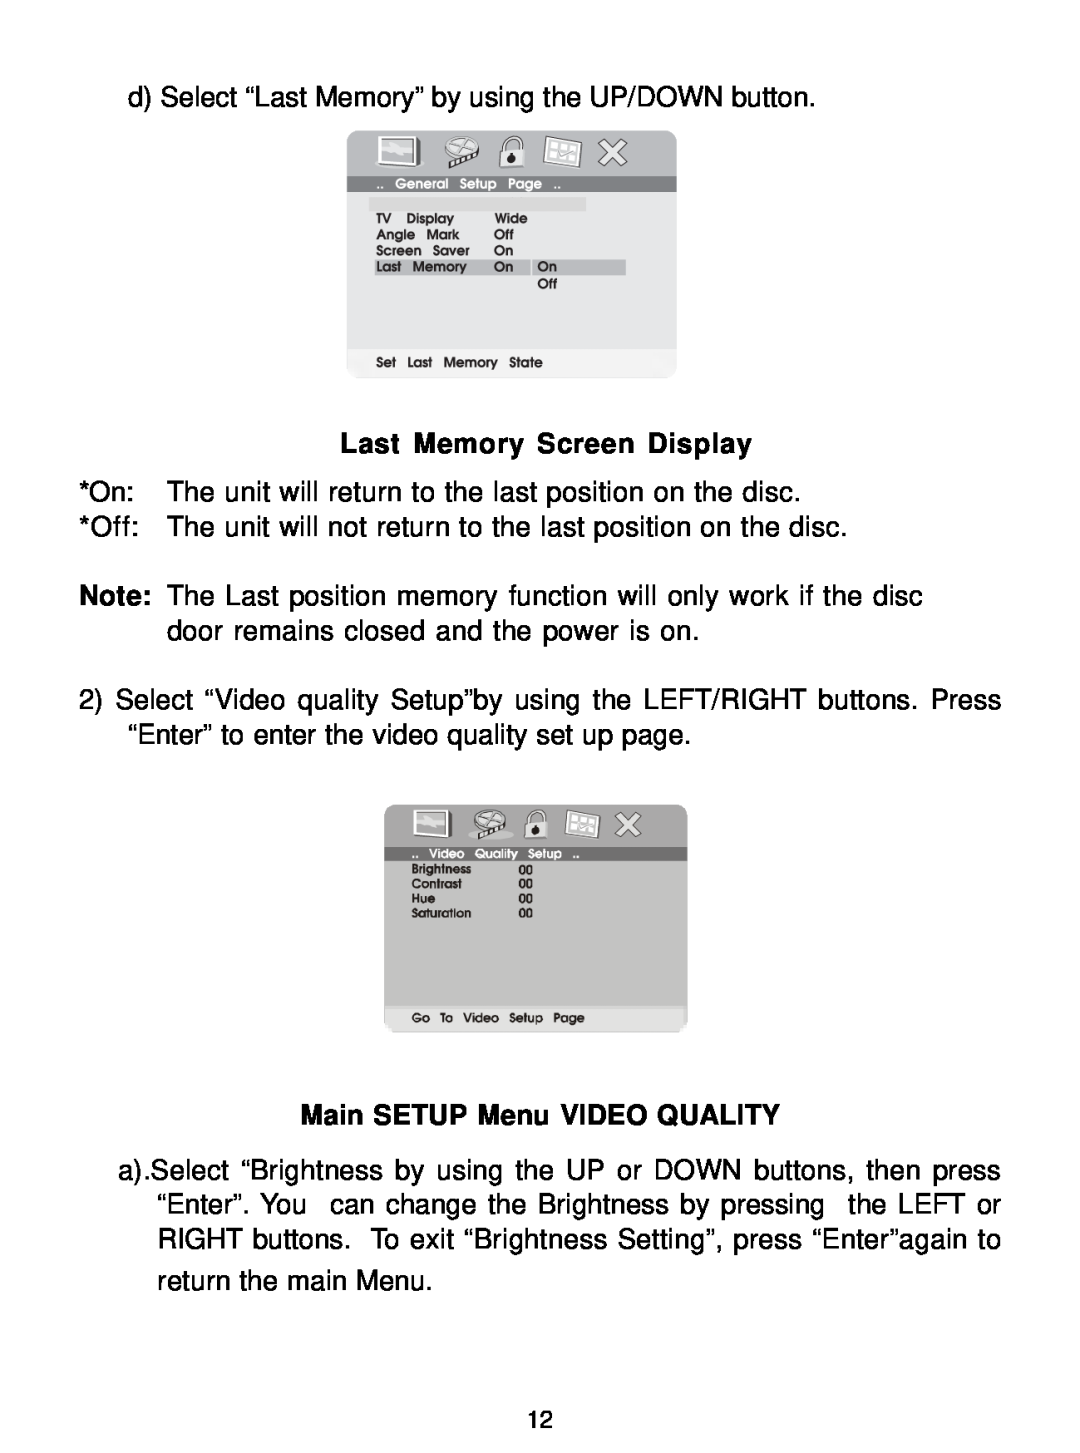 Audiovox D1726 manual Last Memory Screen Display, Main SETUP Menu VIDEO QUALITY 